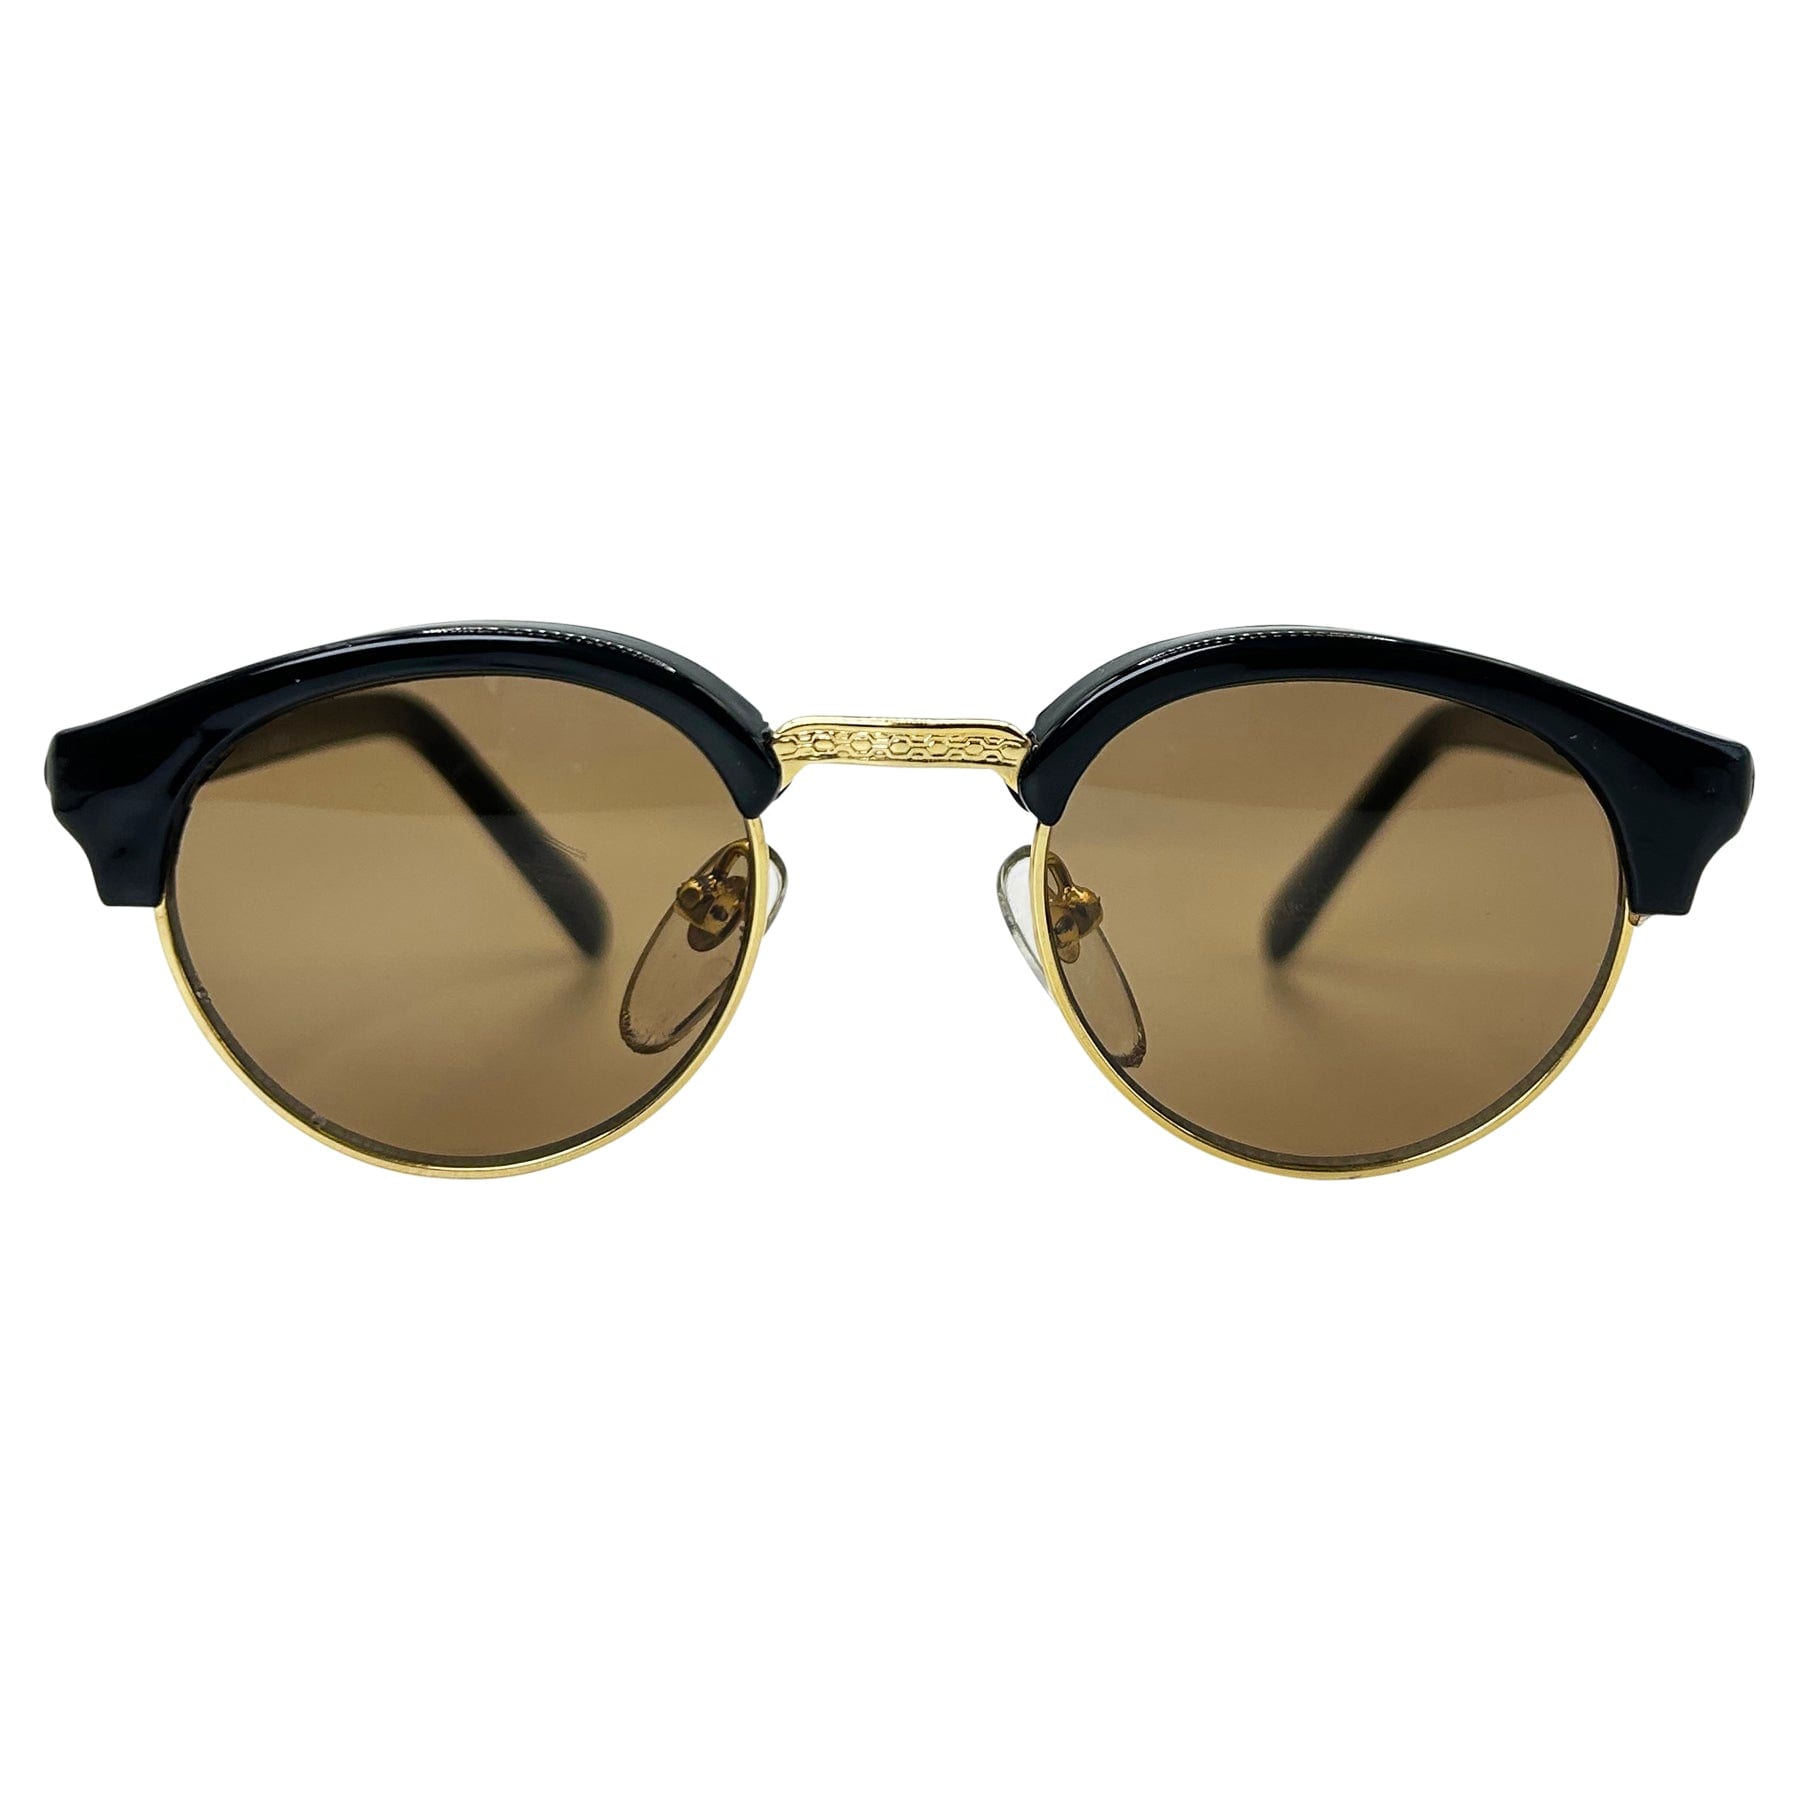 FRESHMEN Tiny Classic 60s Sunglasses